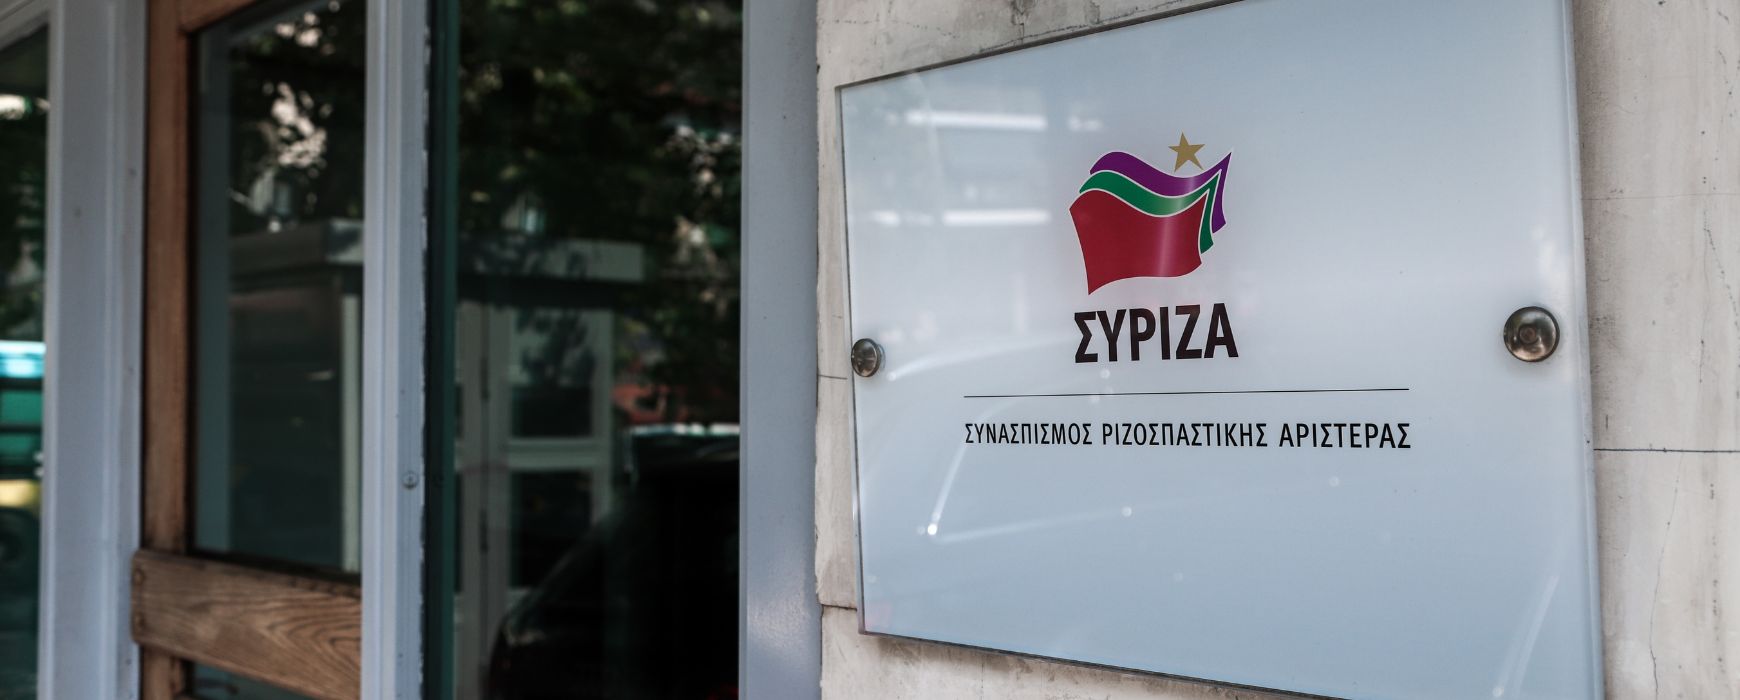 syriza_logo2_new